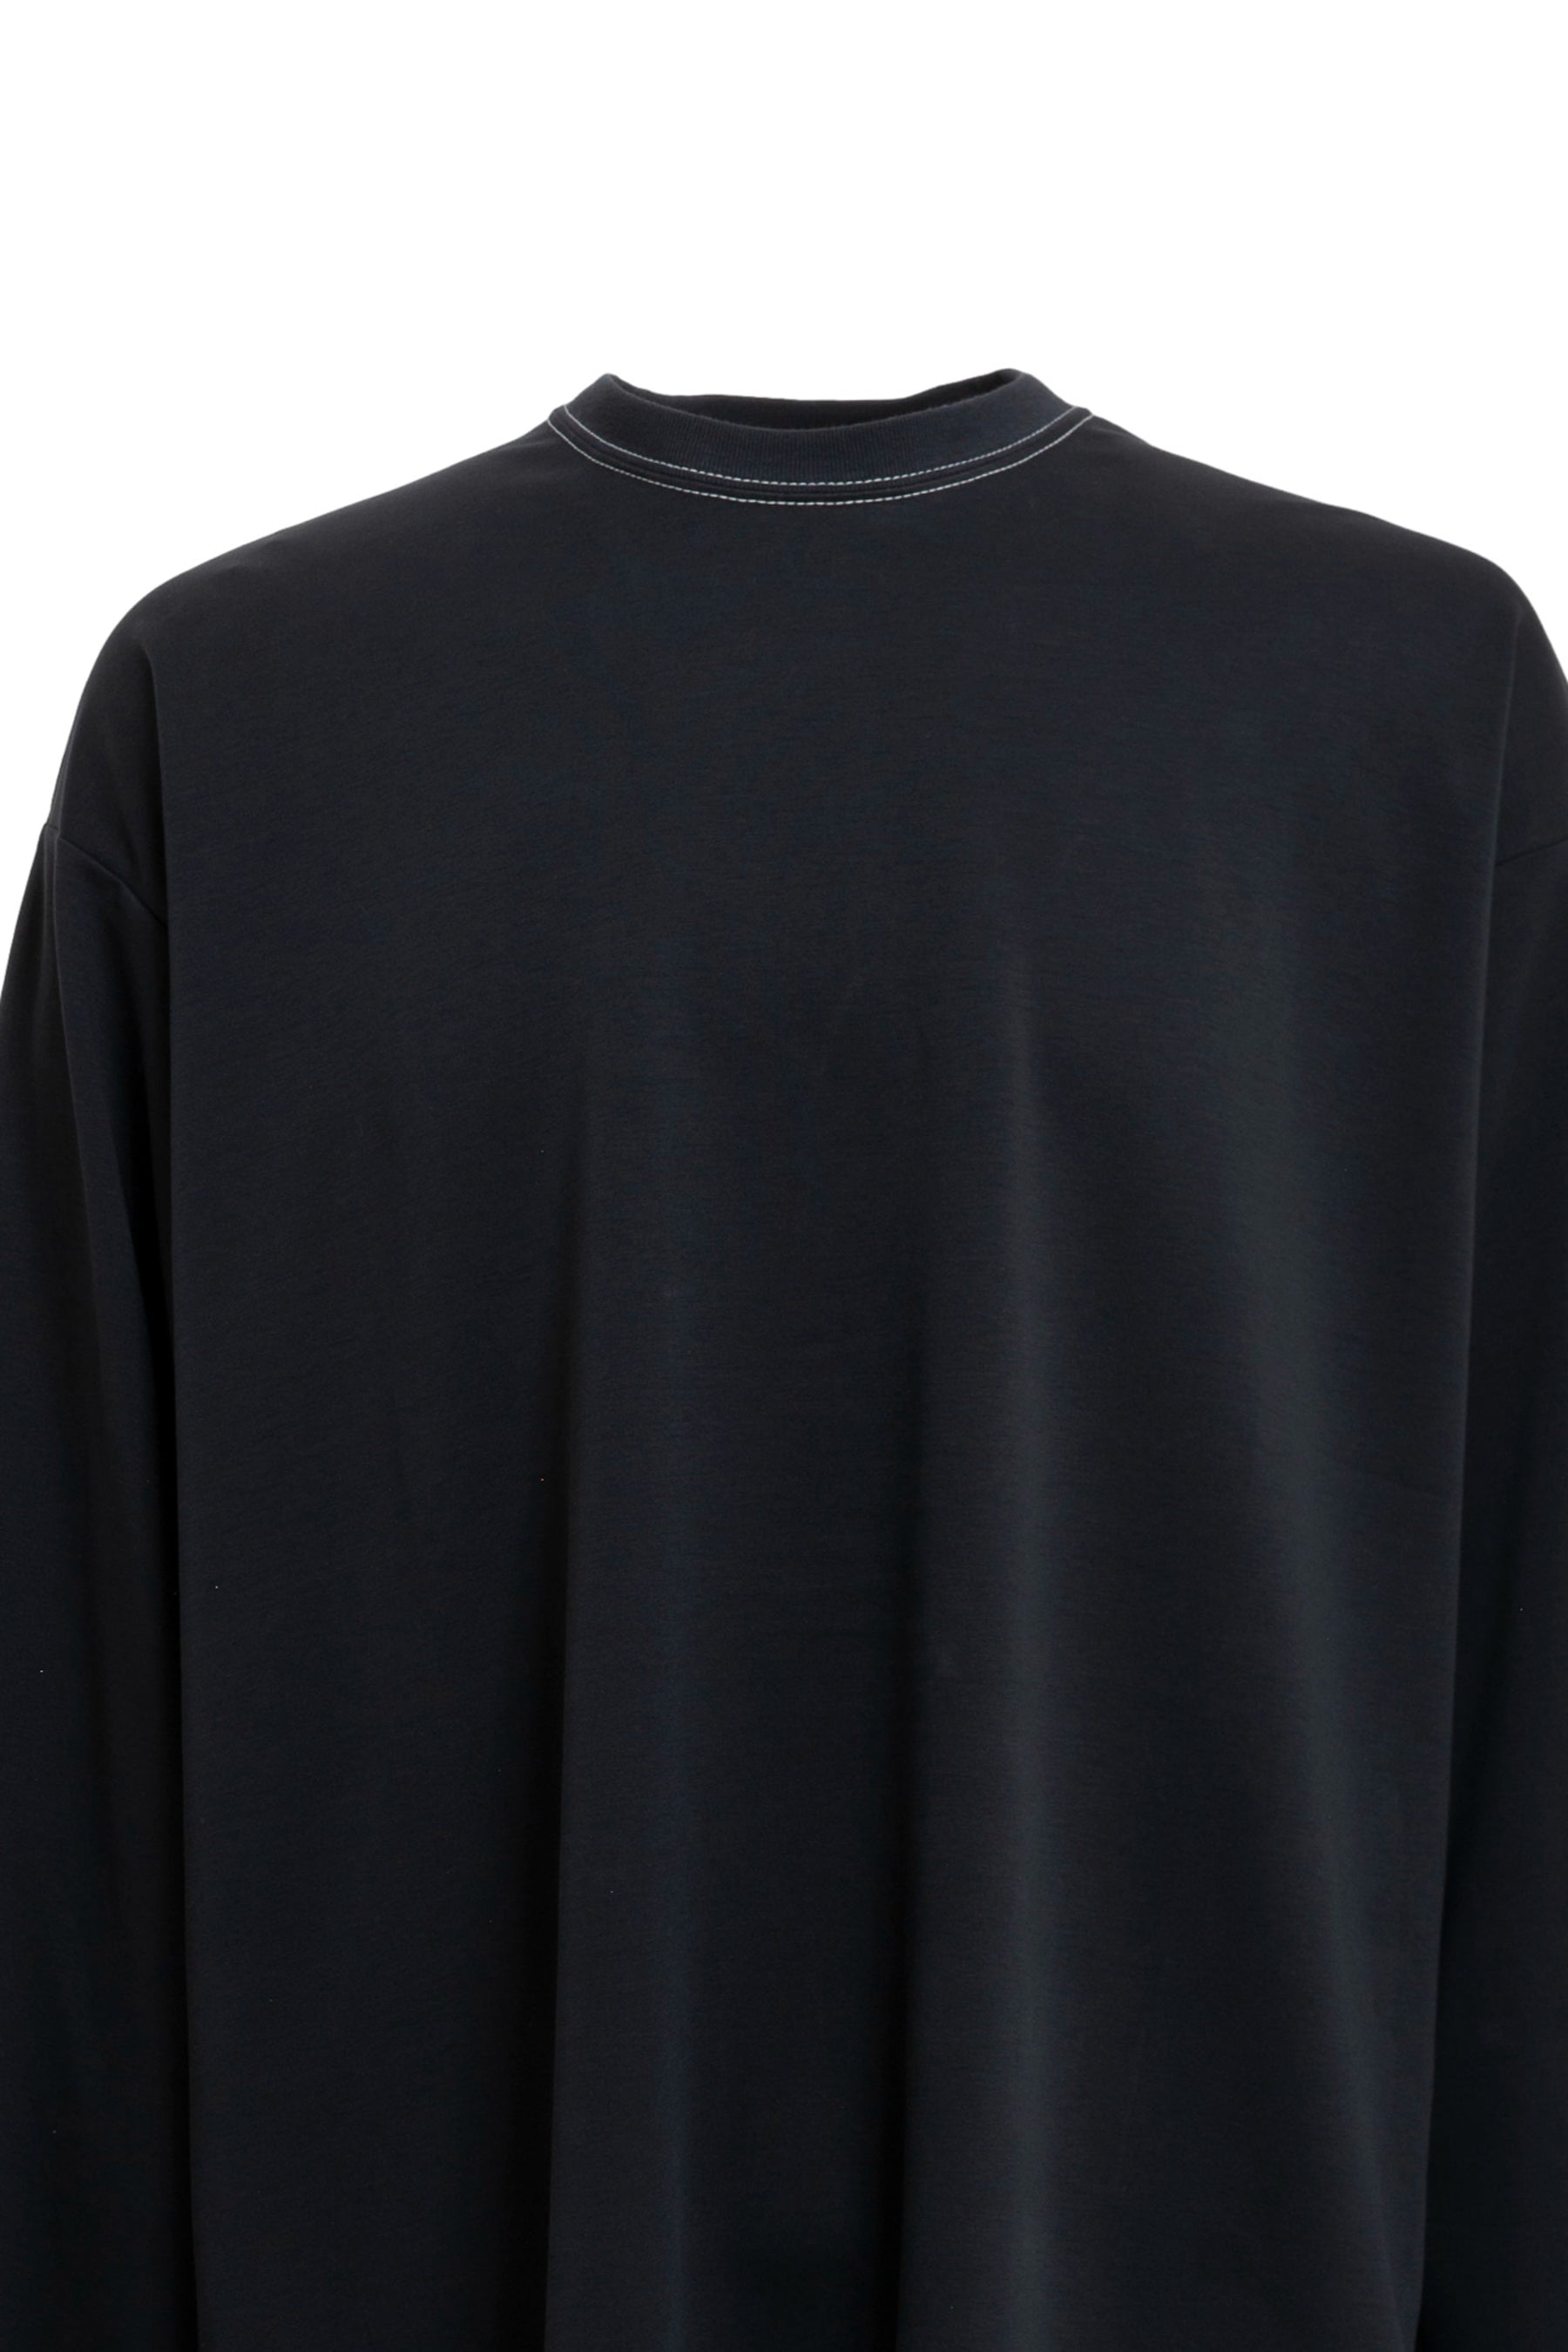 Savage X Cotton Jersey Unlined Bra in Black